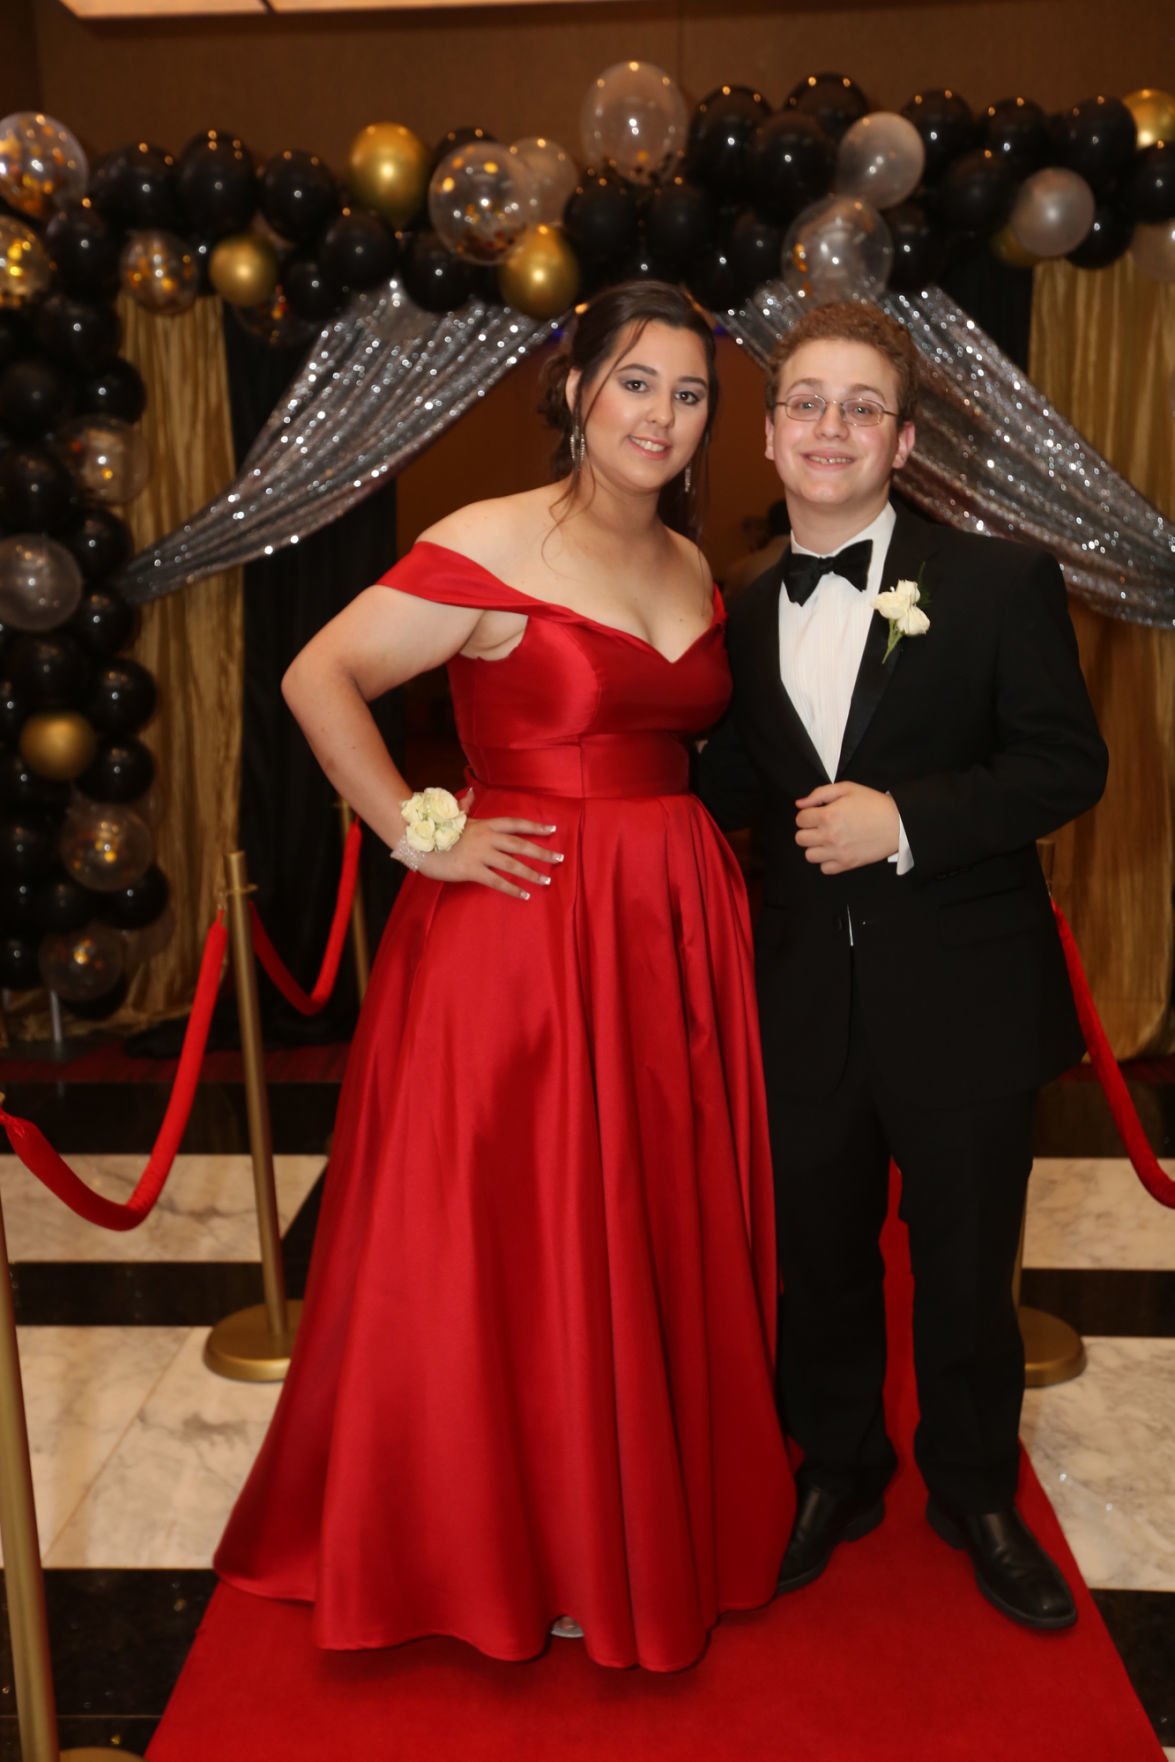 GALLERY: Atlantic City High School prom 2019 | Prom Central